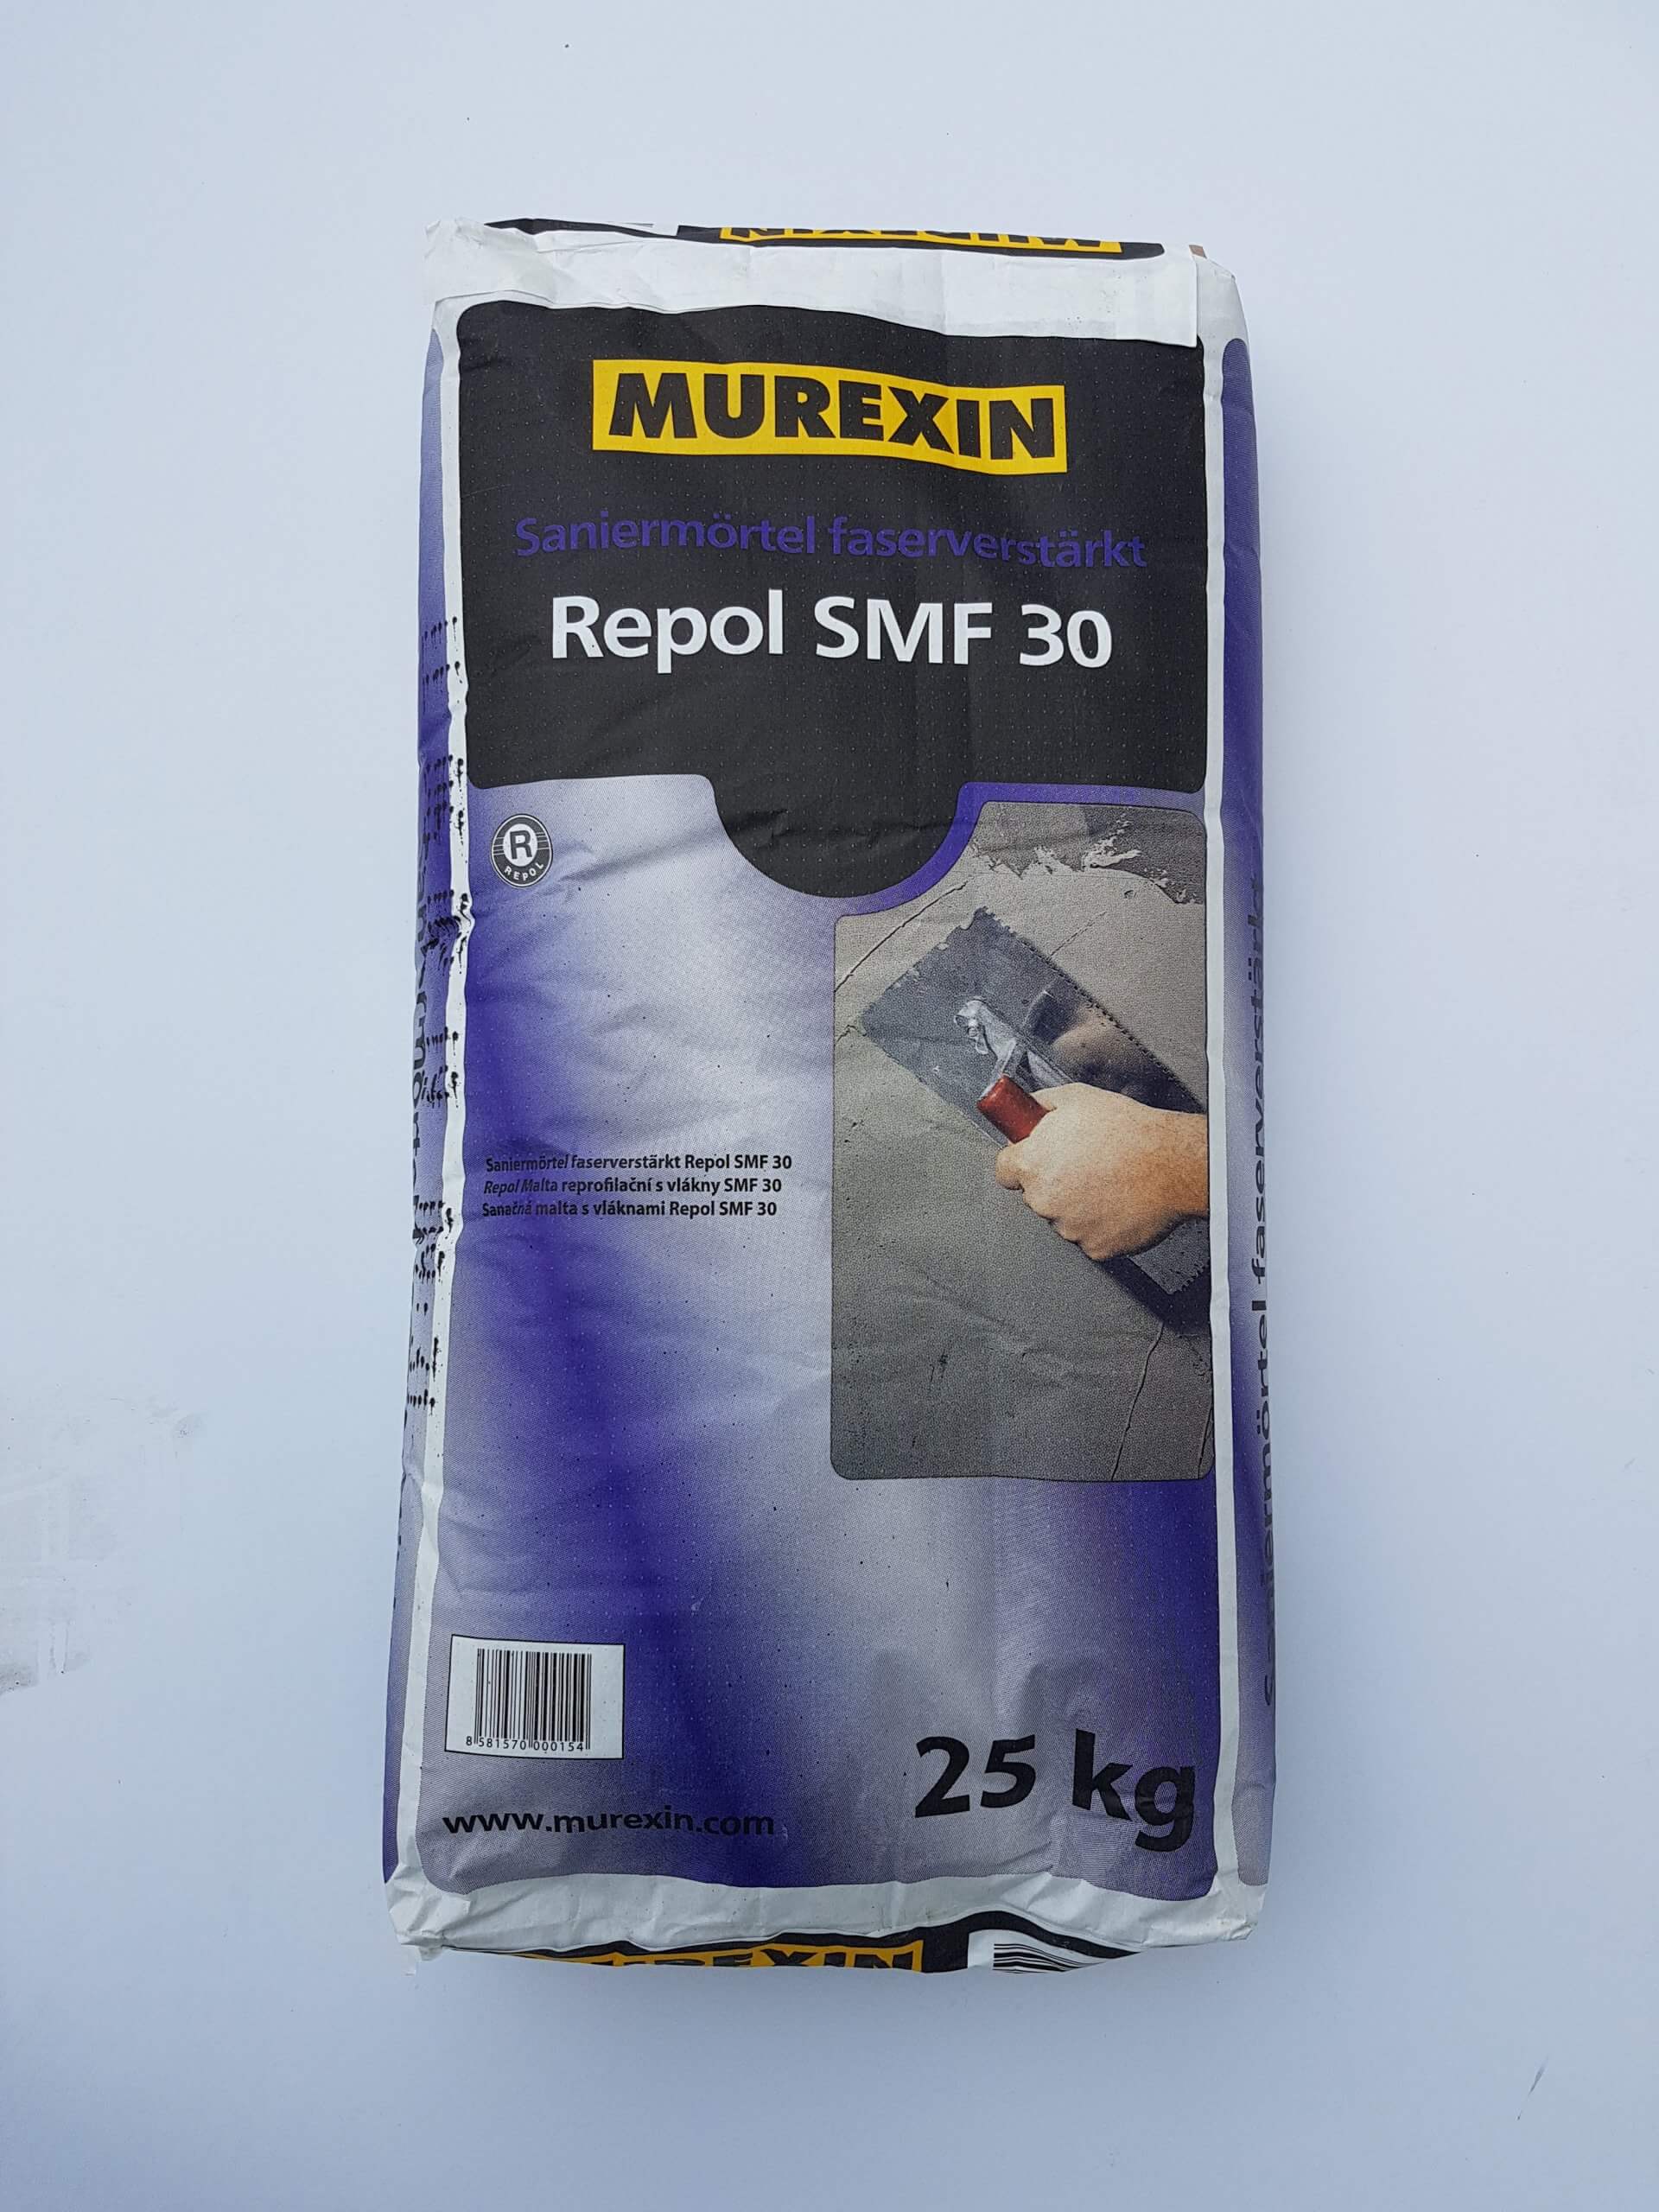 Murexin Repol Malta reprofilační s vlákny SMF 30 25 kg